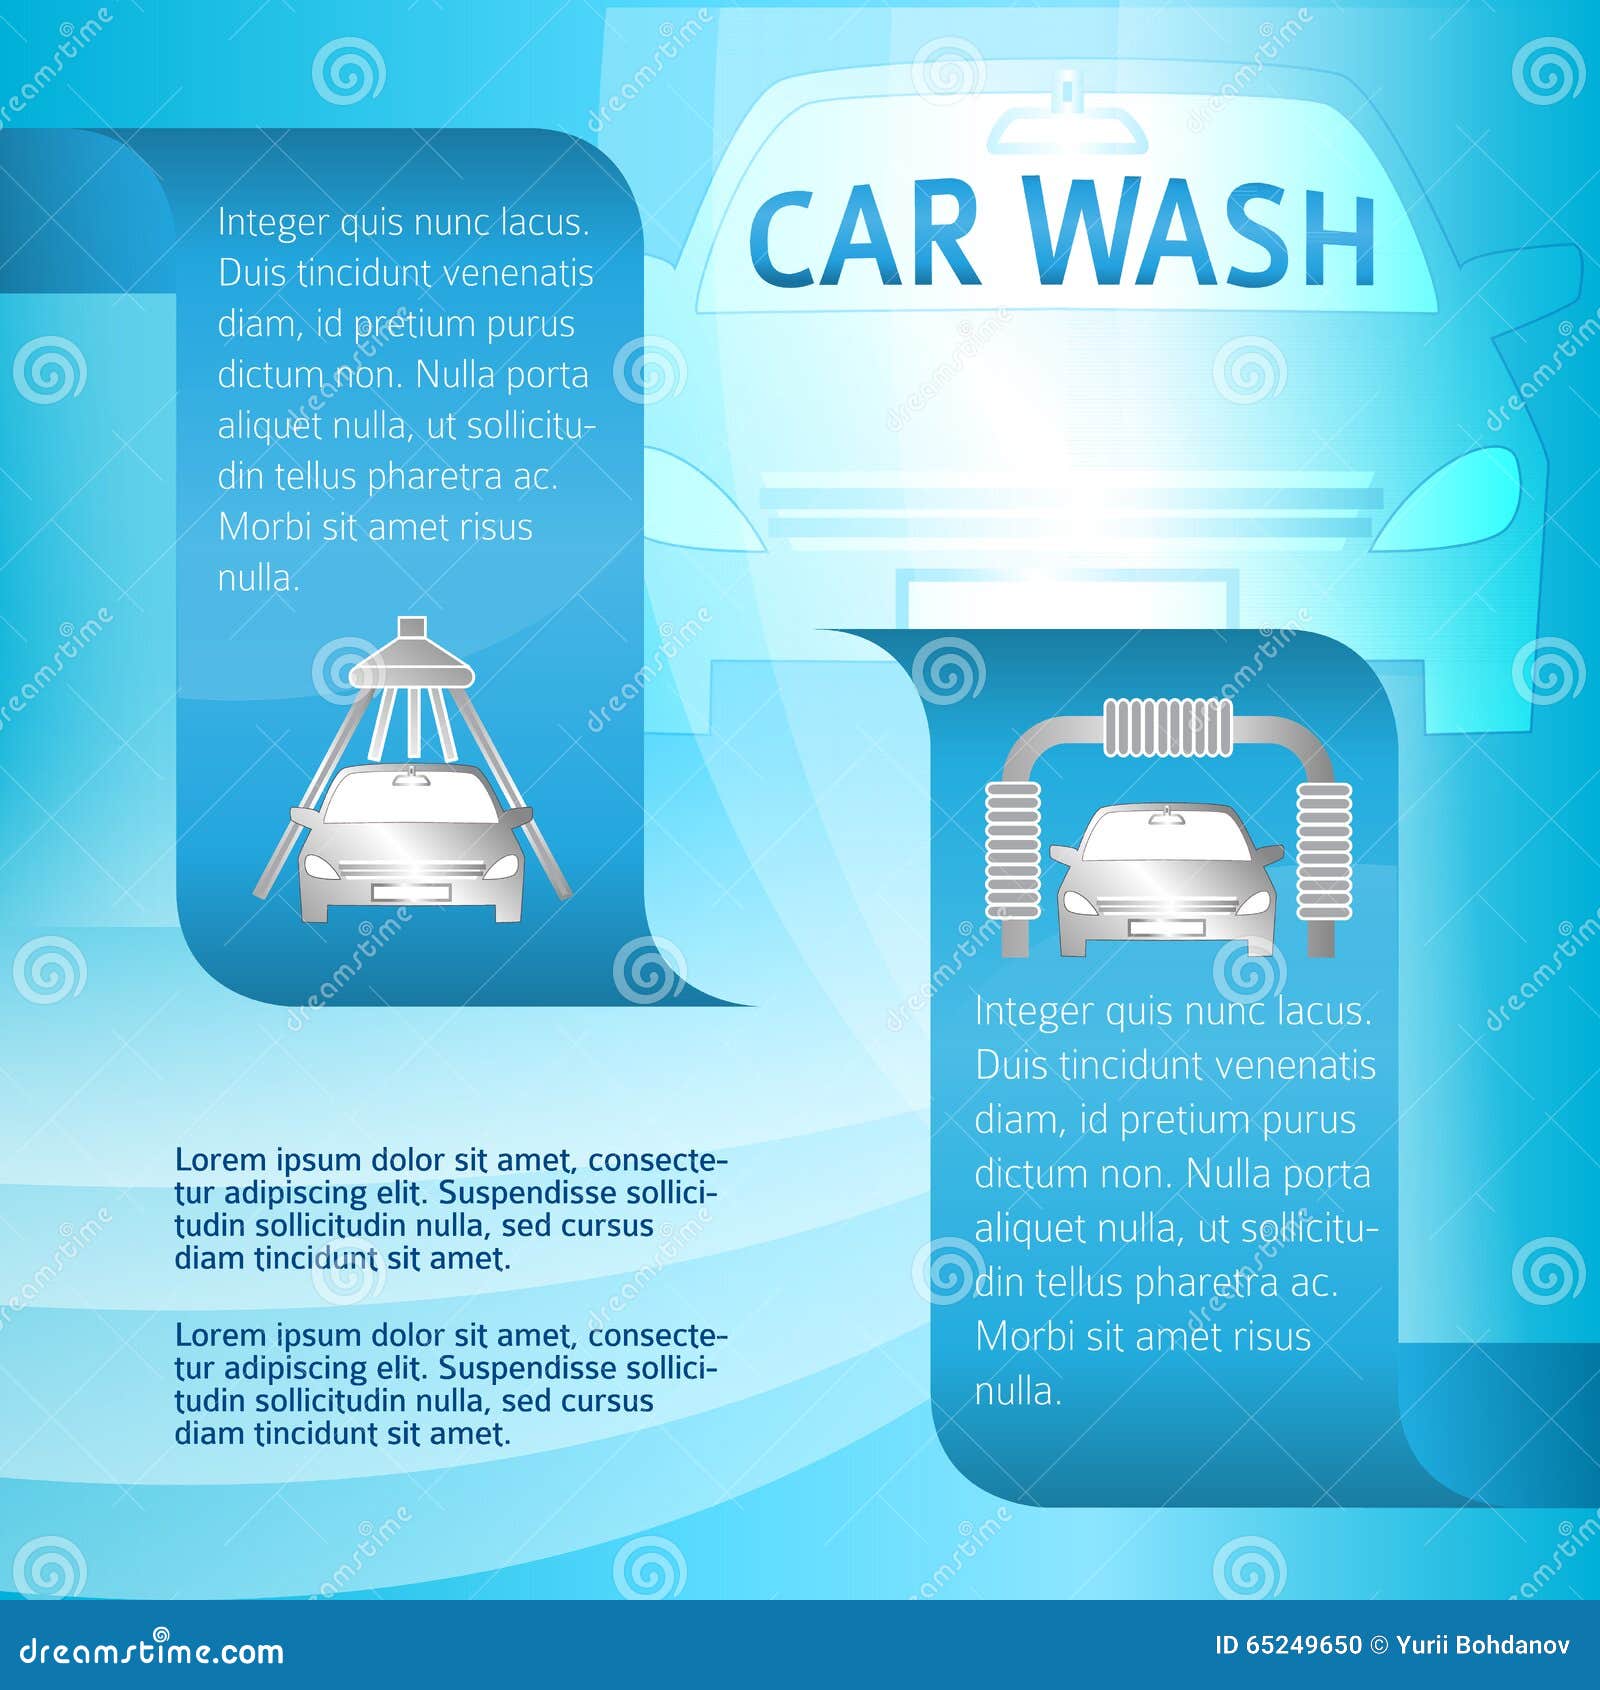 car wash business plan presentation